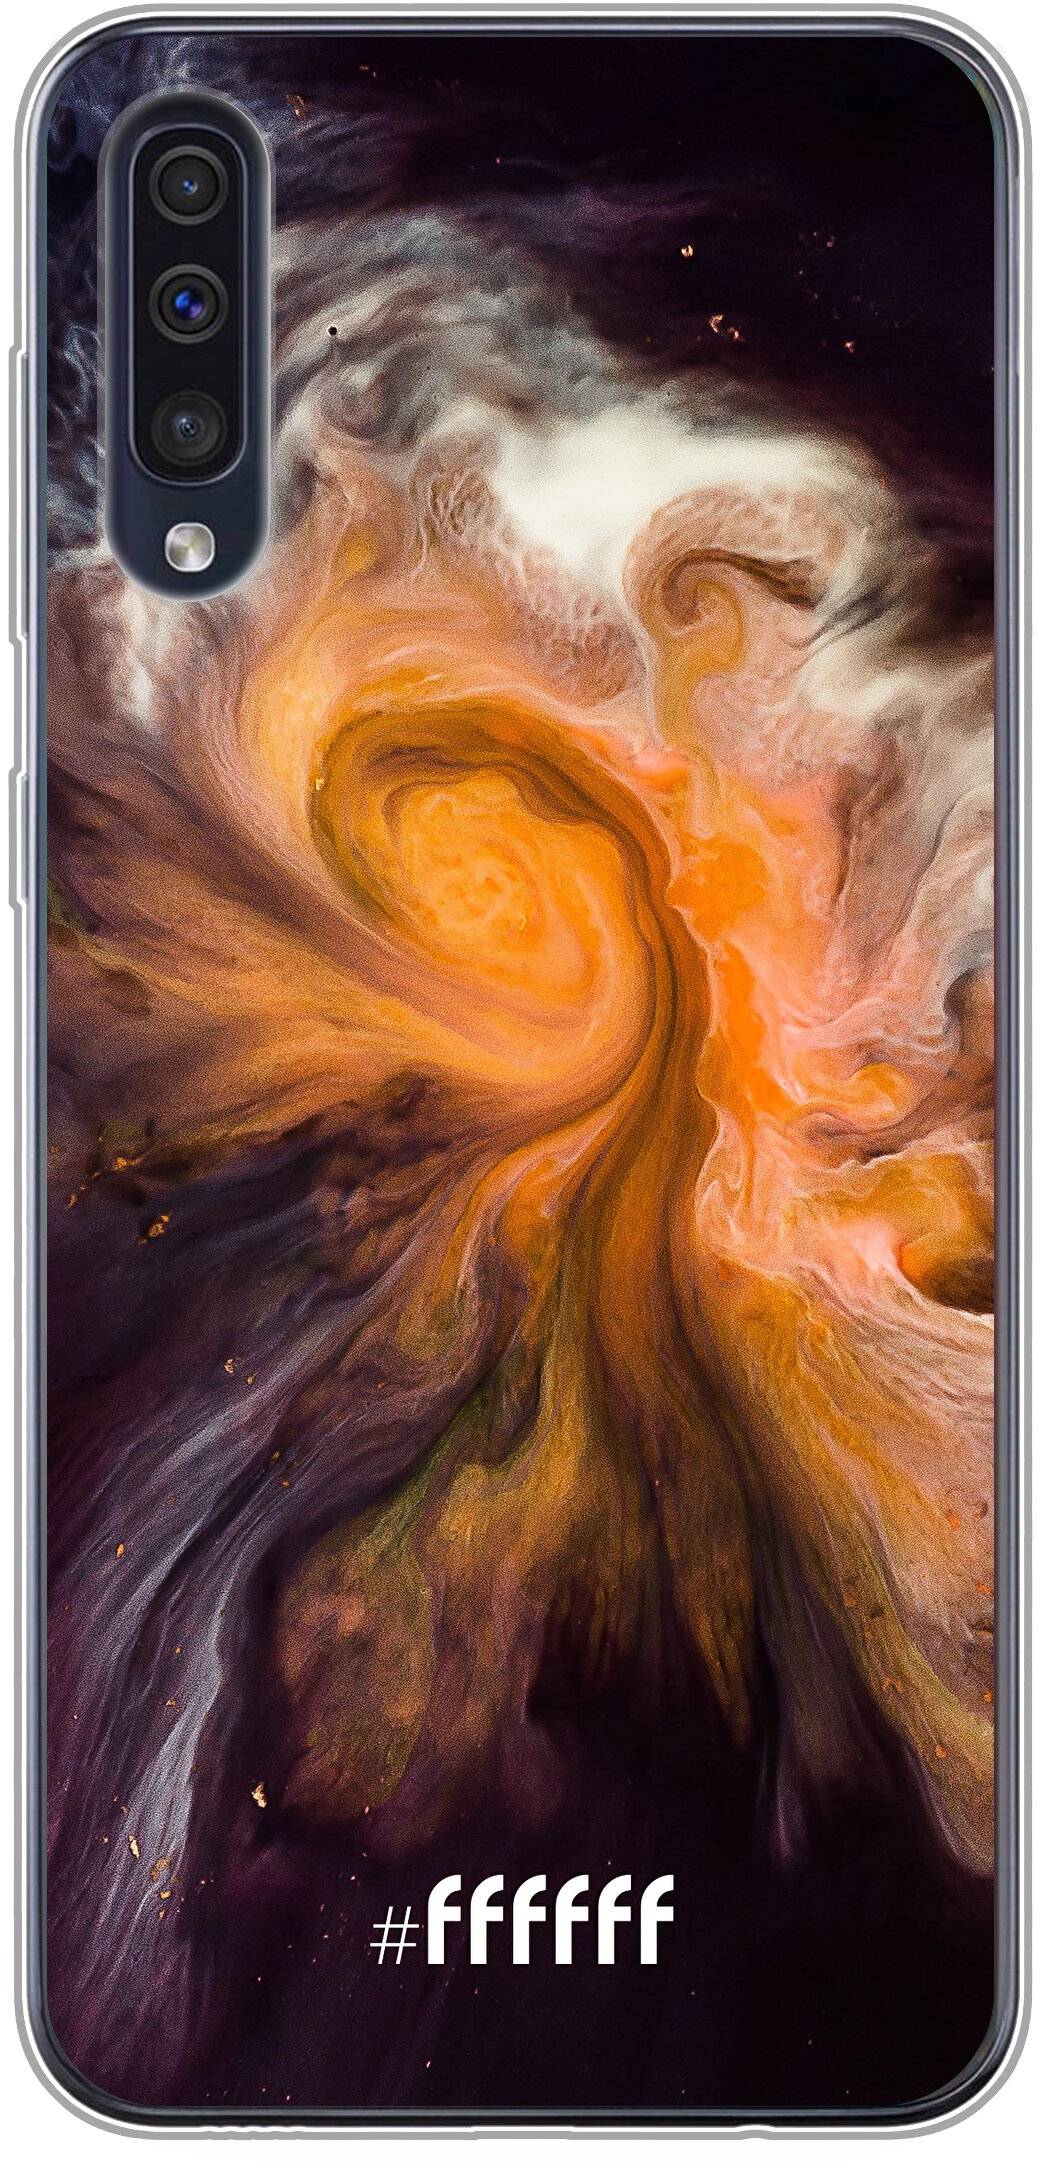 Crazy Space Galaxy A50